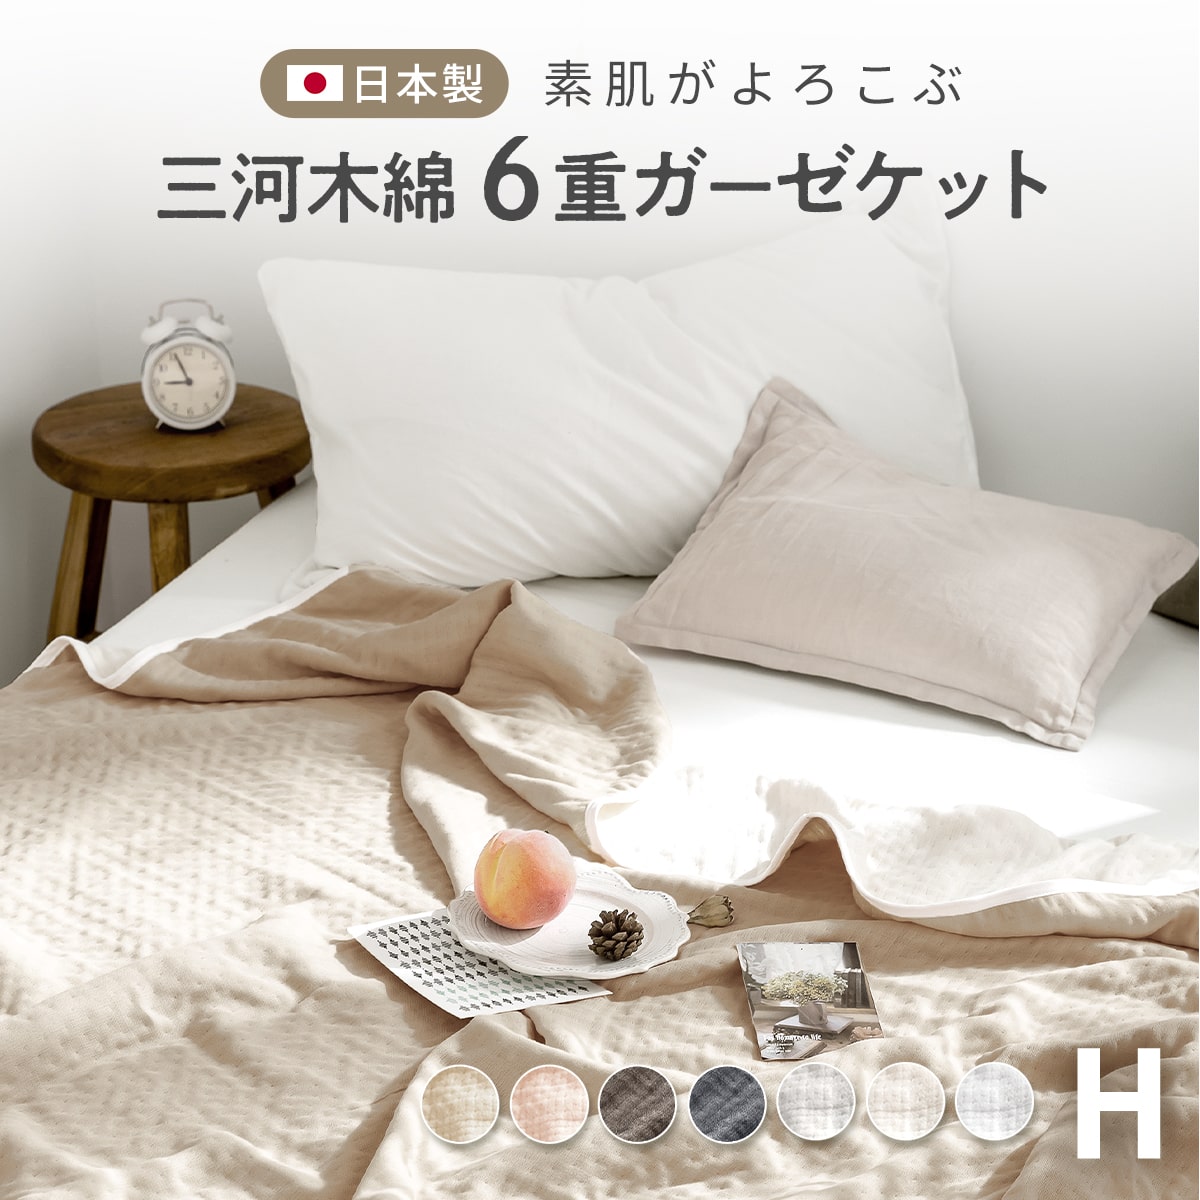  gauze packet 6 -ply half made in Japan cotton 100% Mikawa tree cotton ... stylish all season new life 